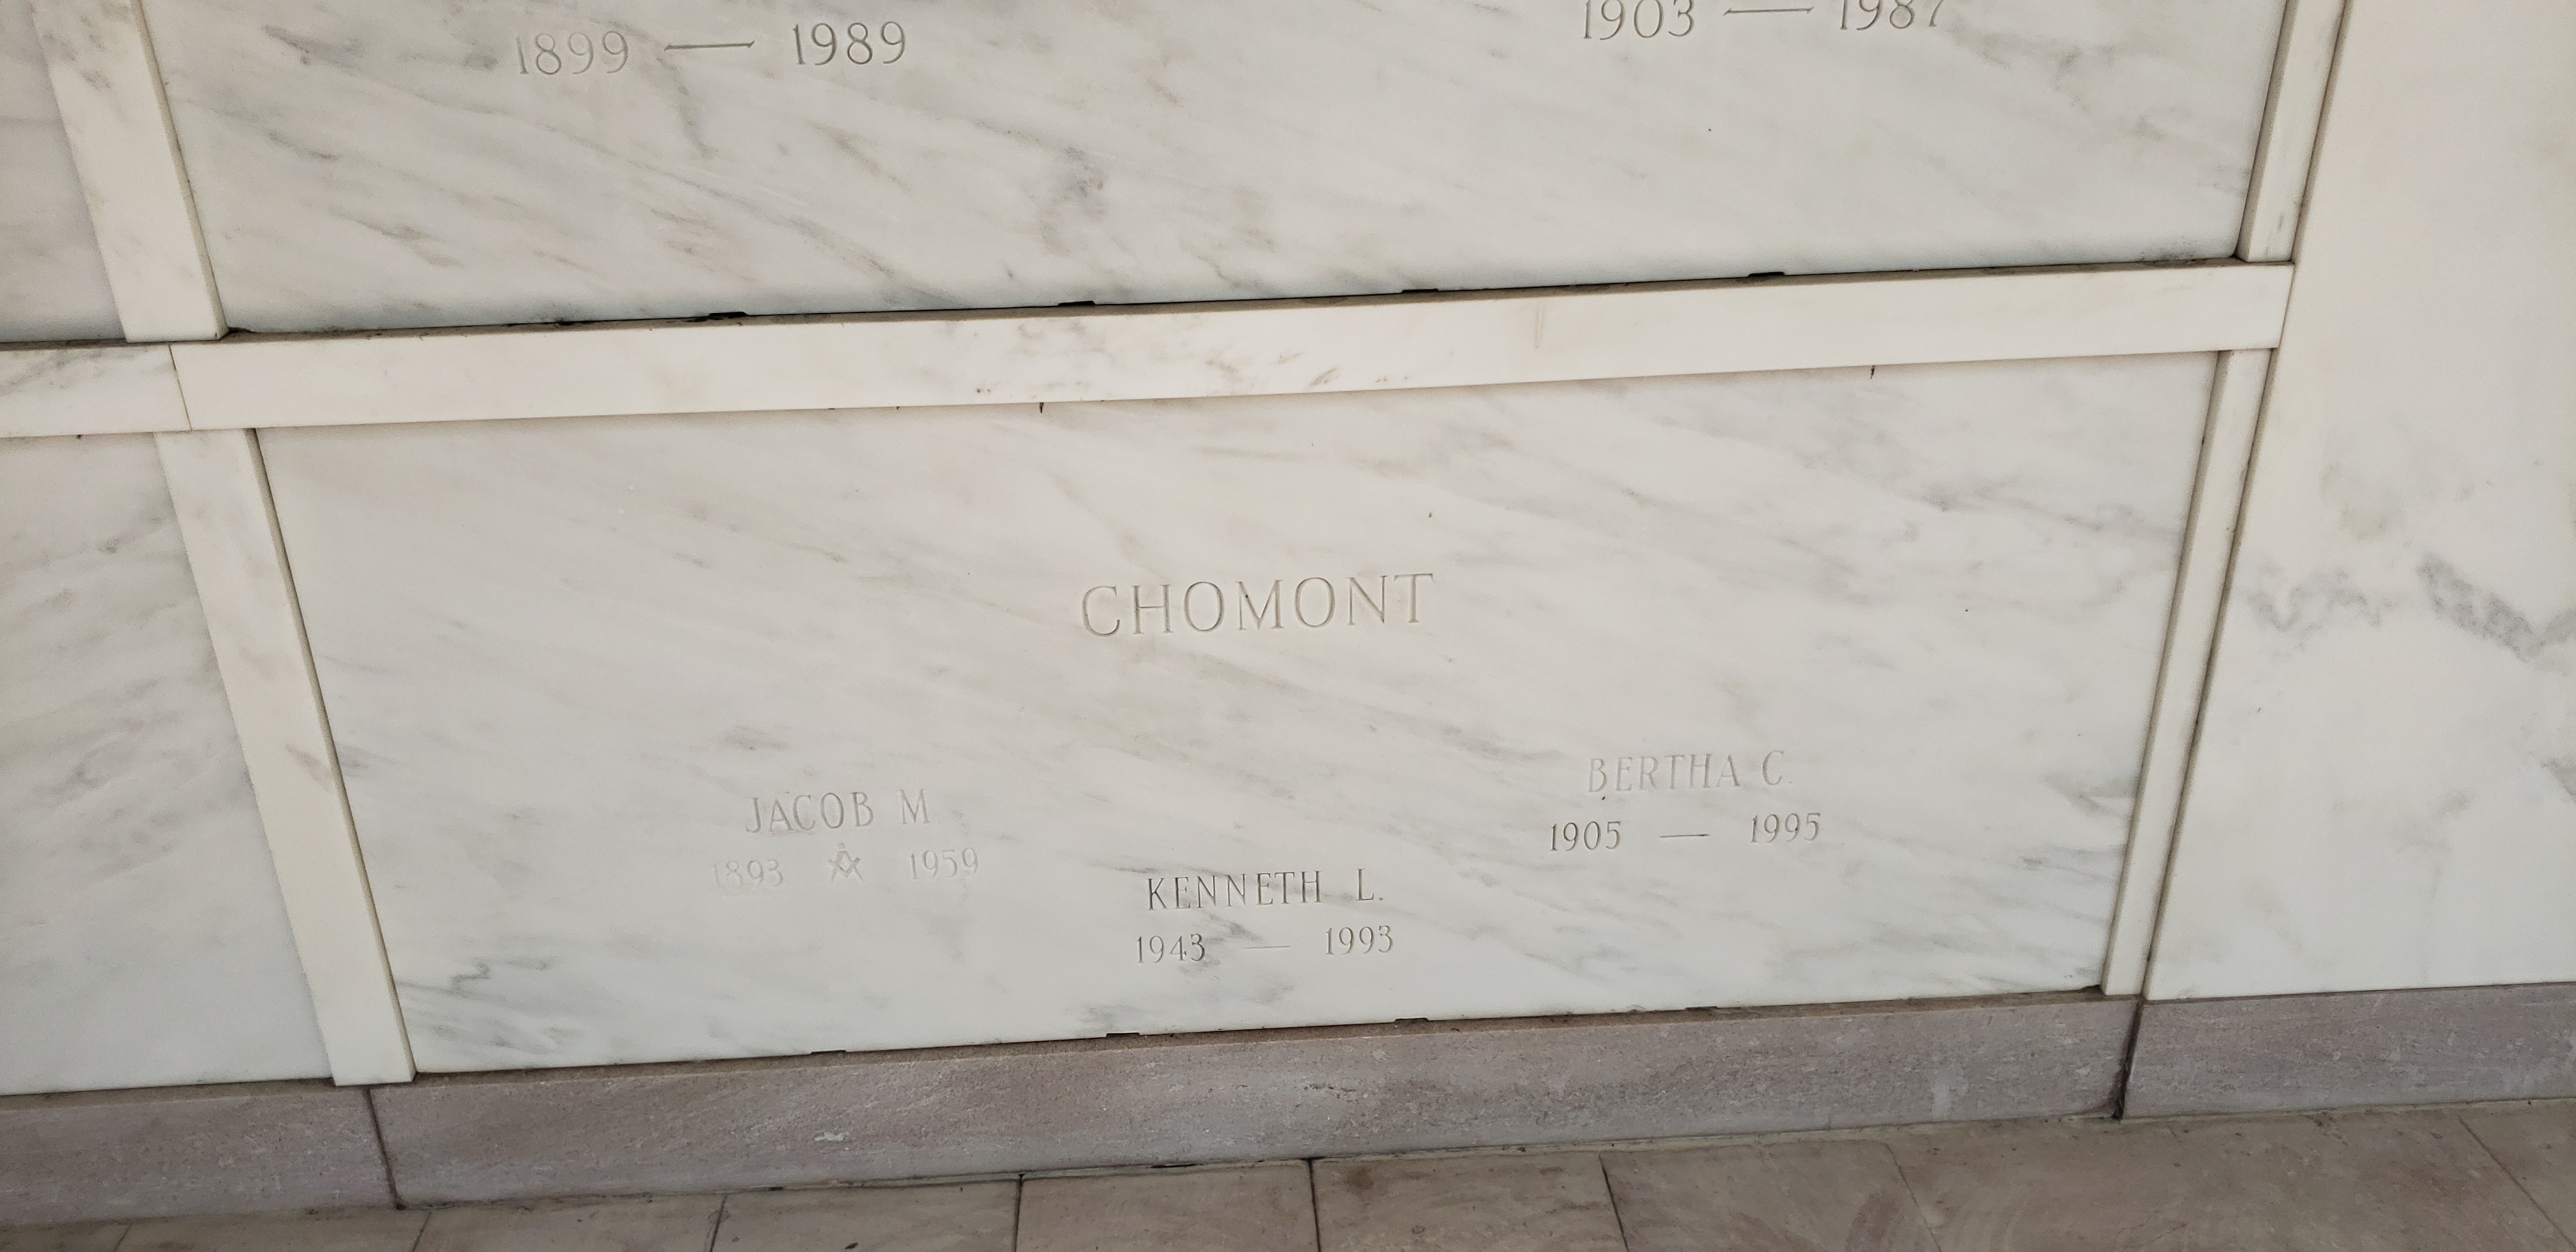 Bertha C Chomont